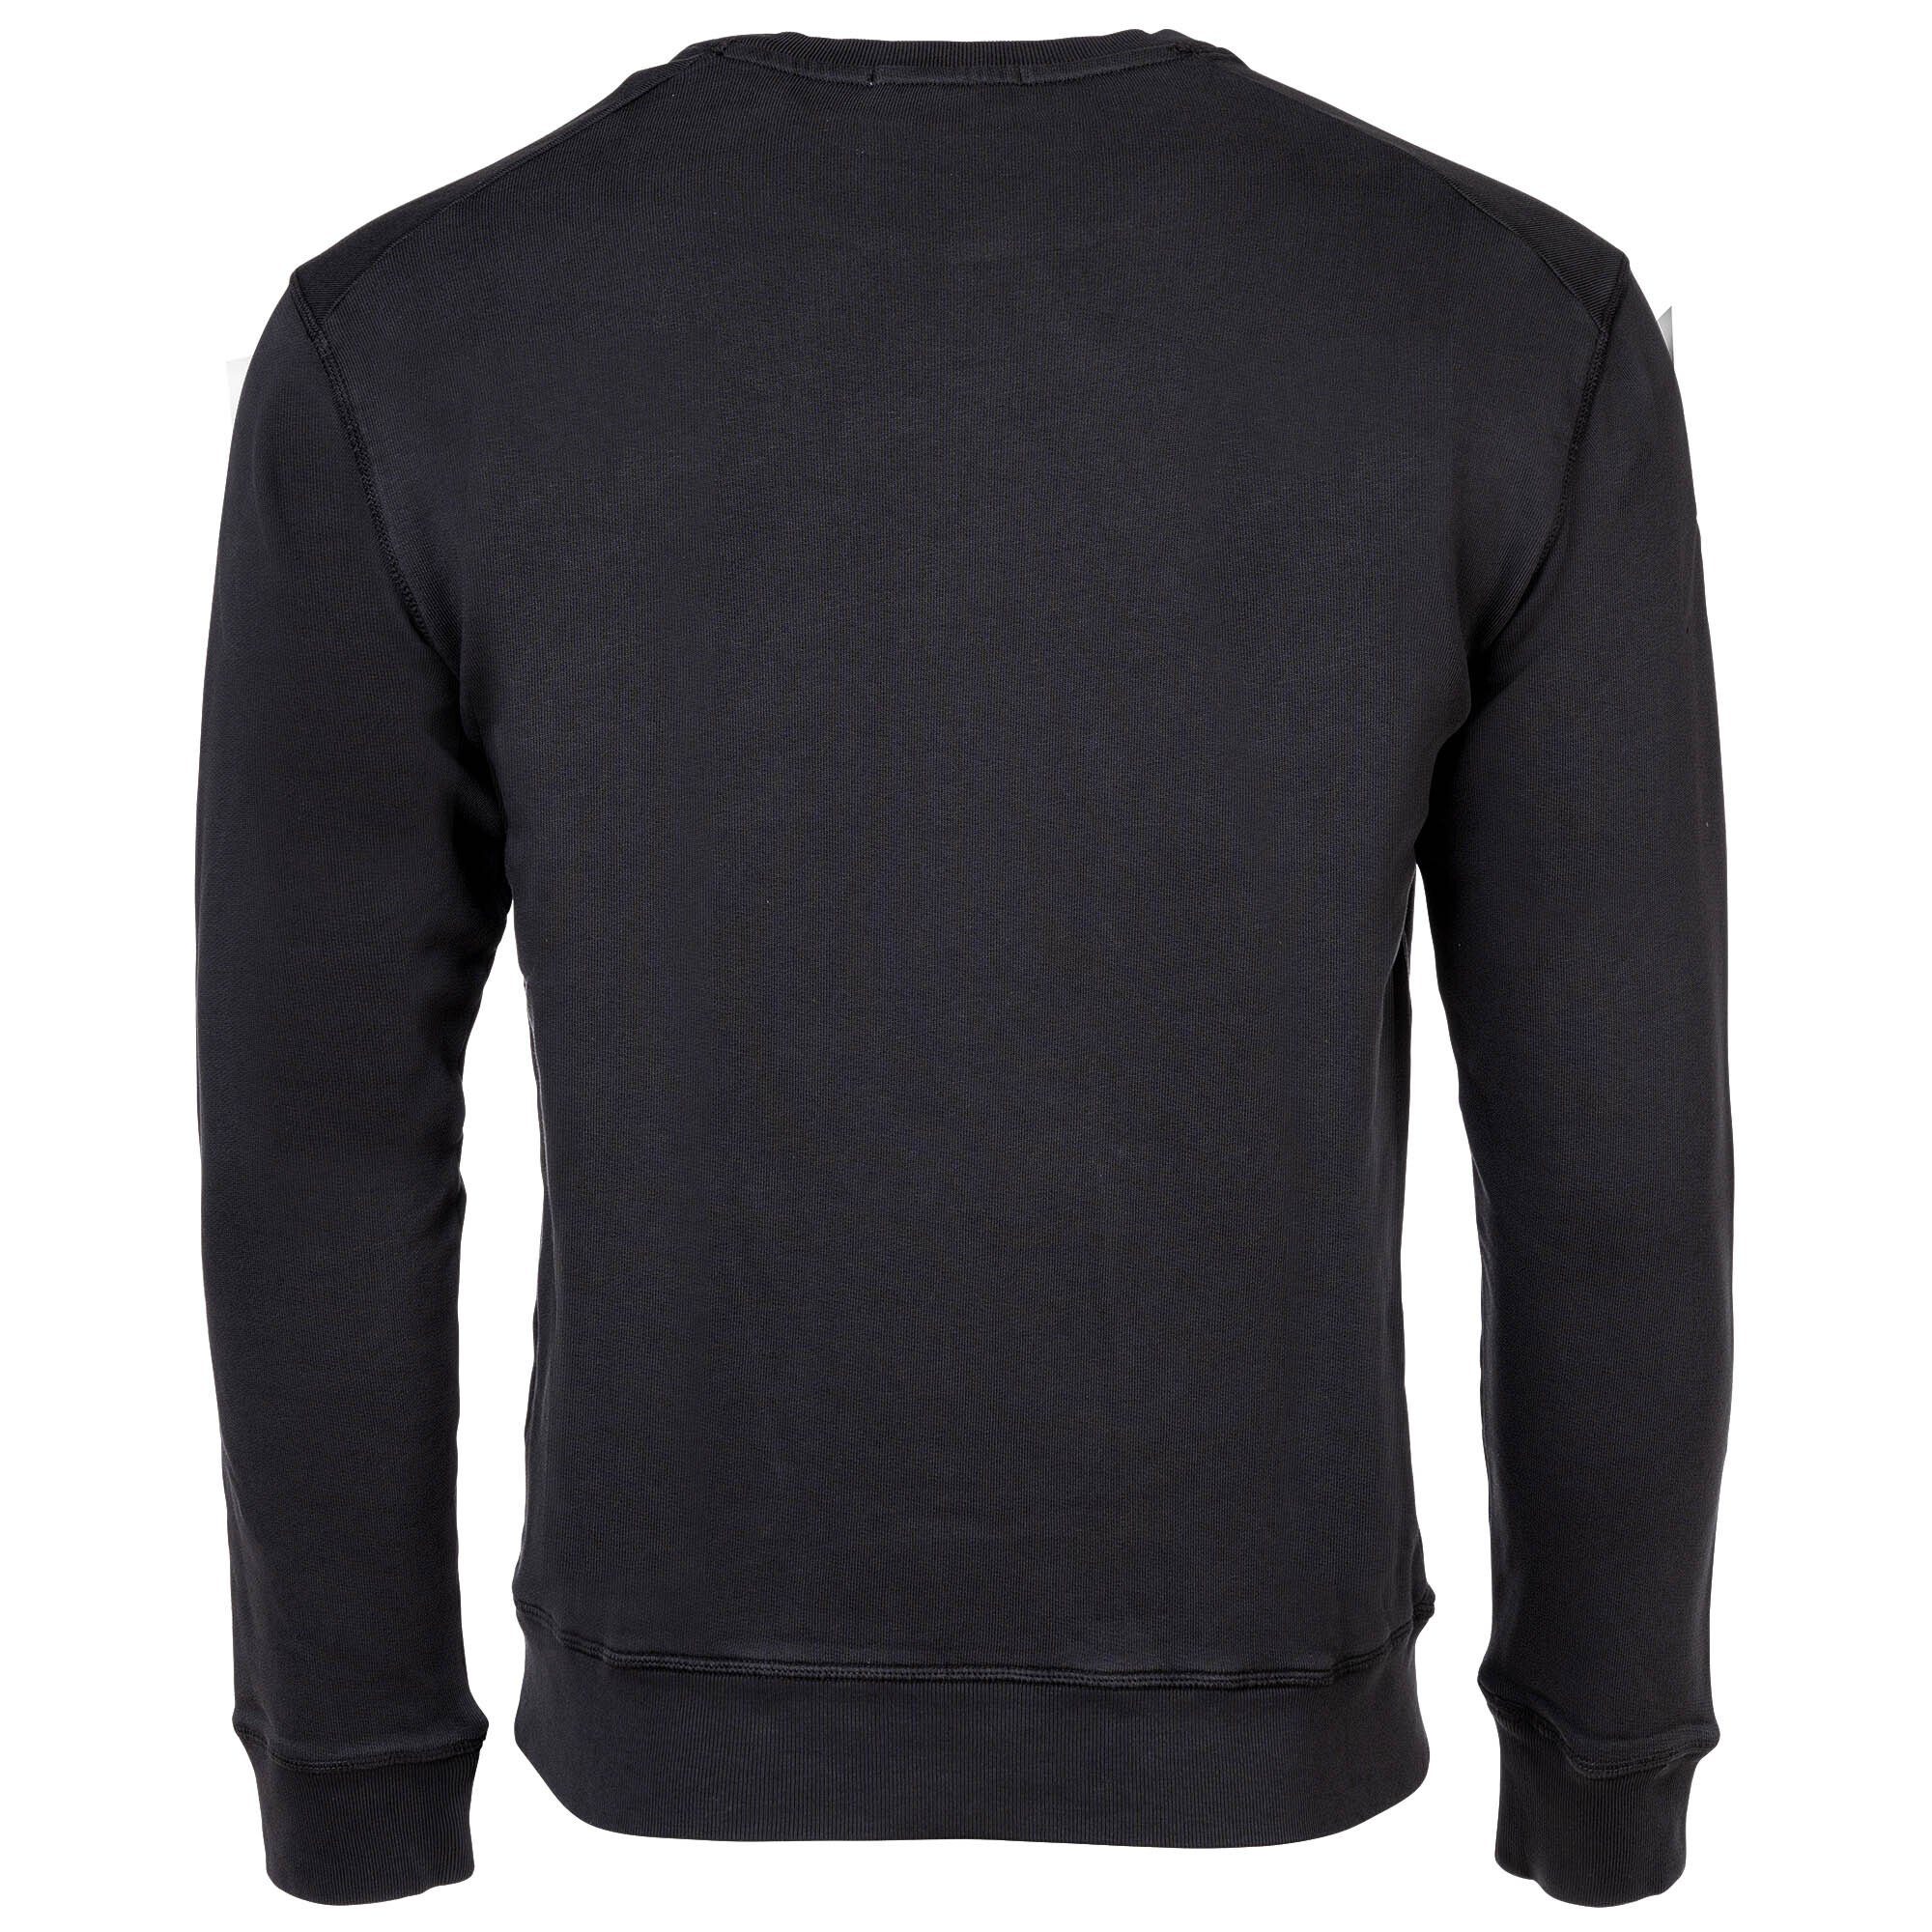 Sweatshirt - Herren Sweatshirt Sweater, Schwarz Organic Rundhals, Replay